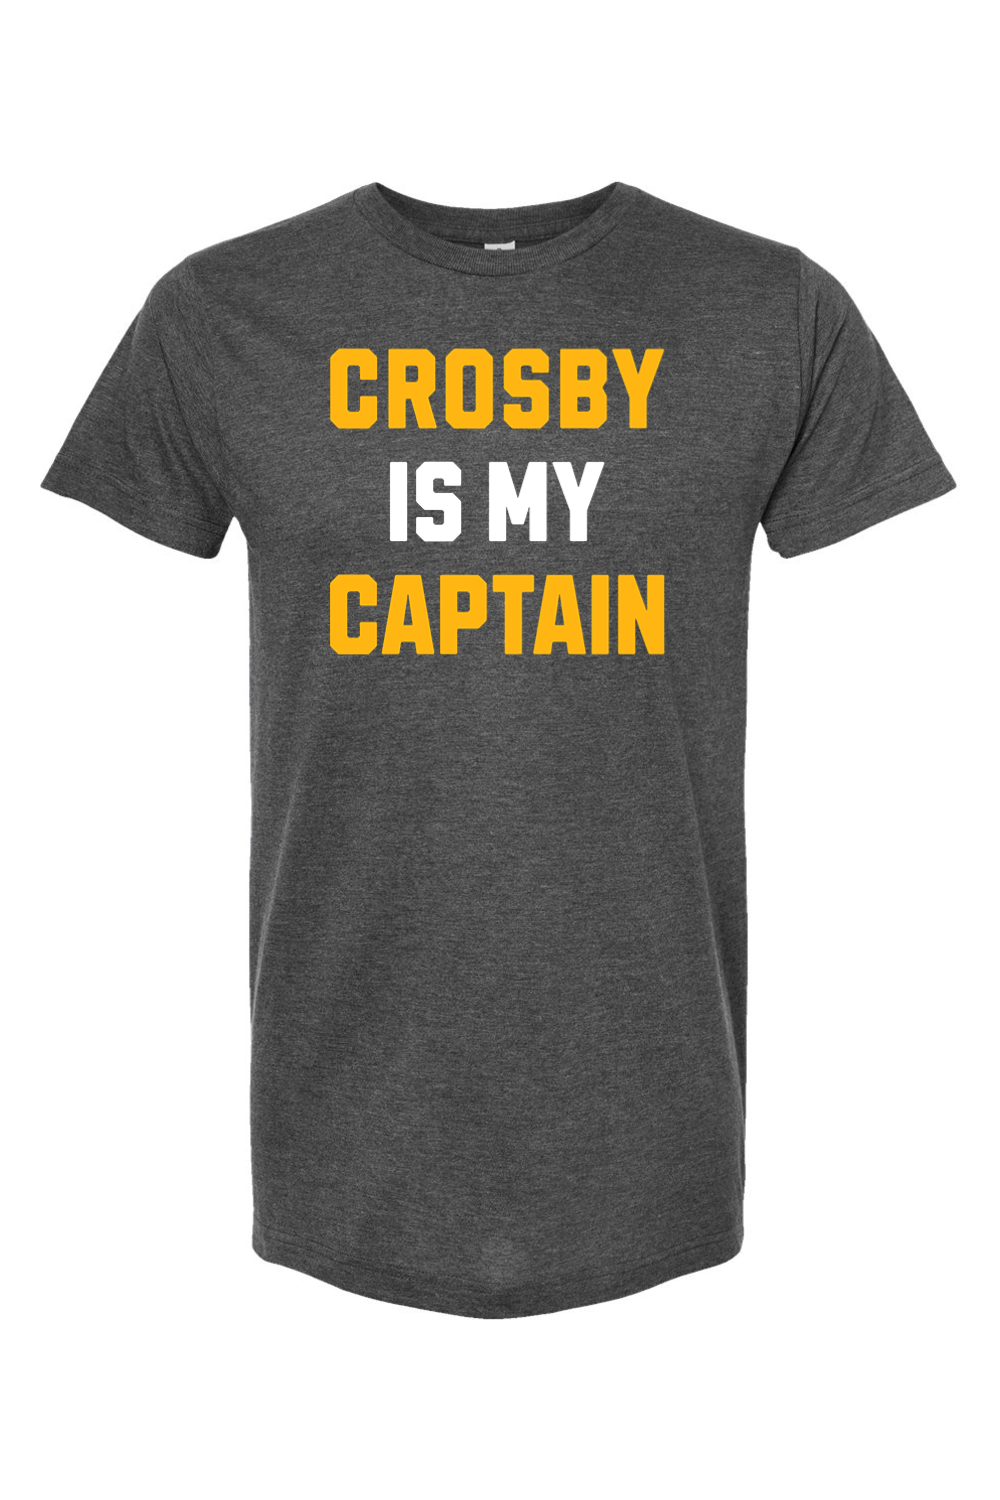 Crosby is My Captain - Yinzylvania